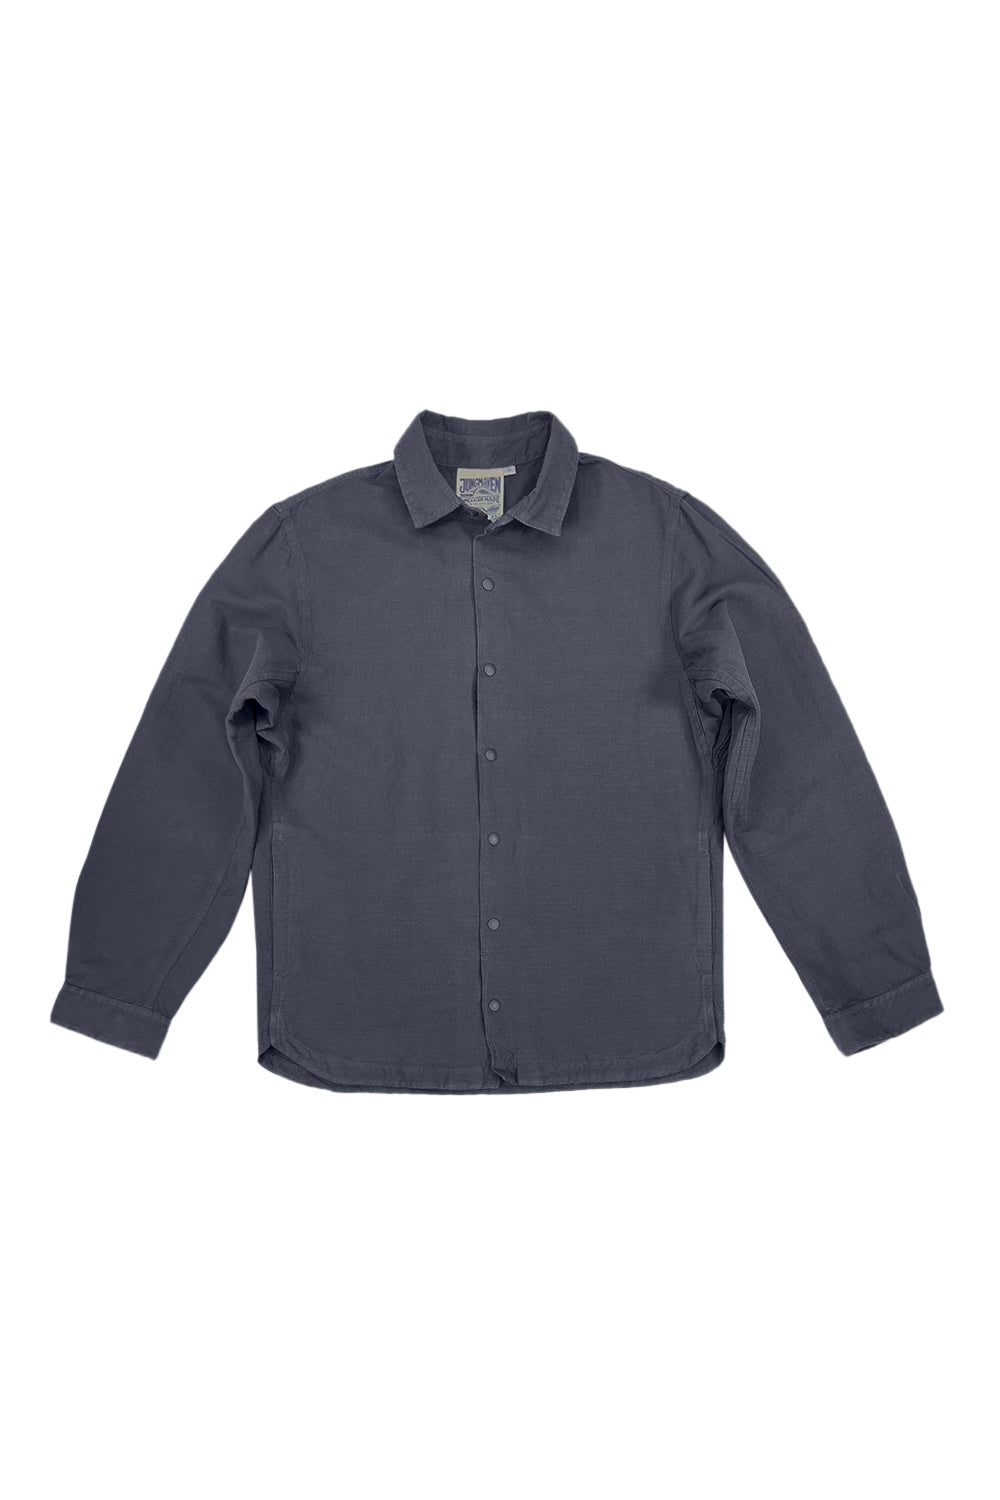 Sandpoint Snap Jacket | Jungmaven Hemp Clothing & Accessories / Color: Diesel Gray